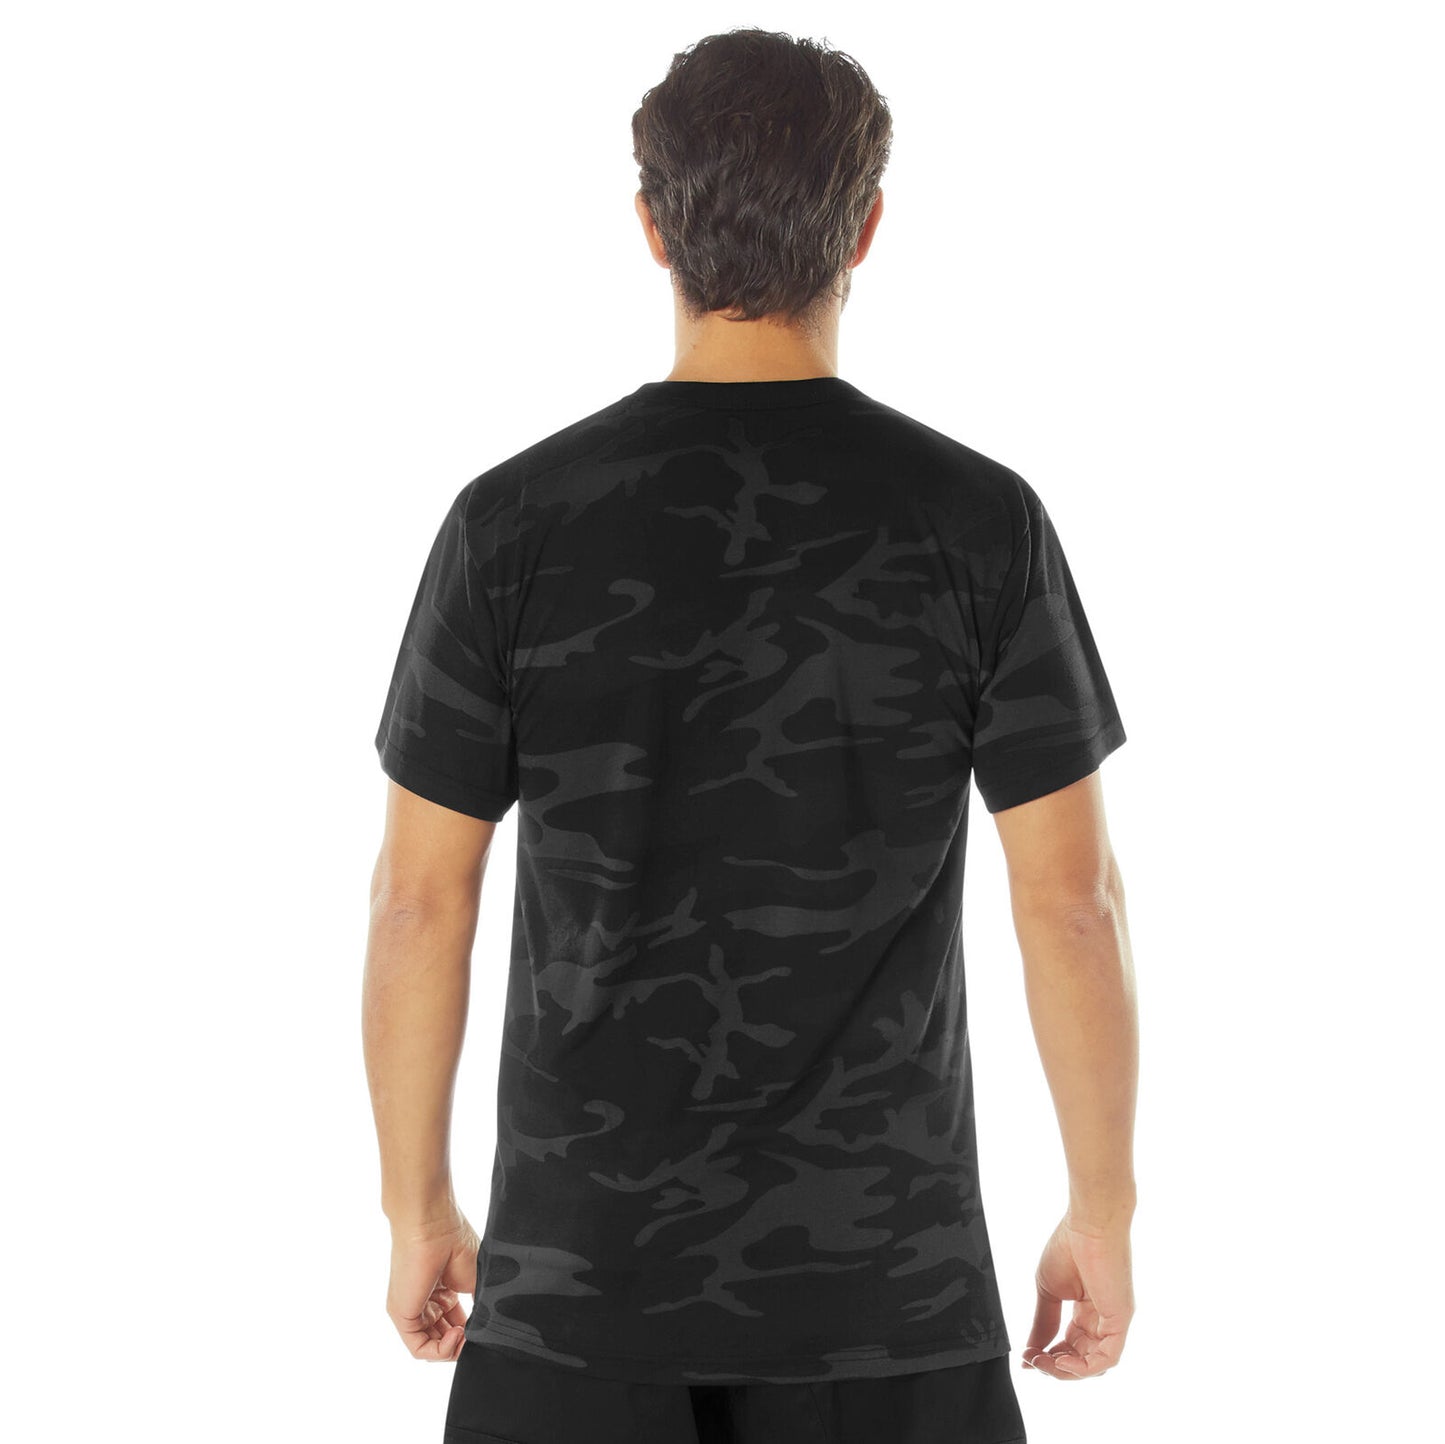 Men's Midnight Black Camo Camouflage Moisture Wicking T-Shirt